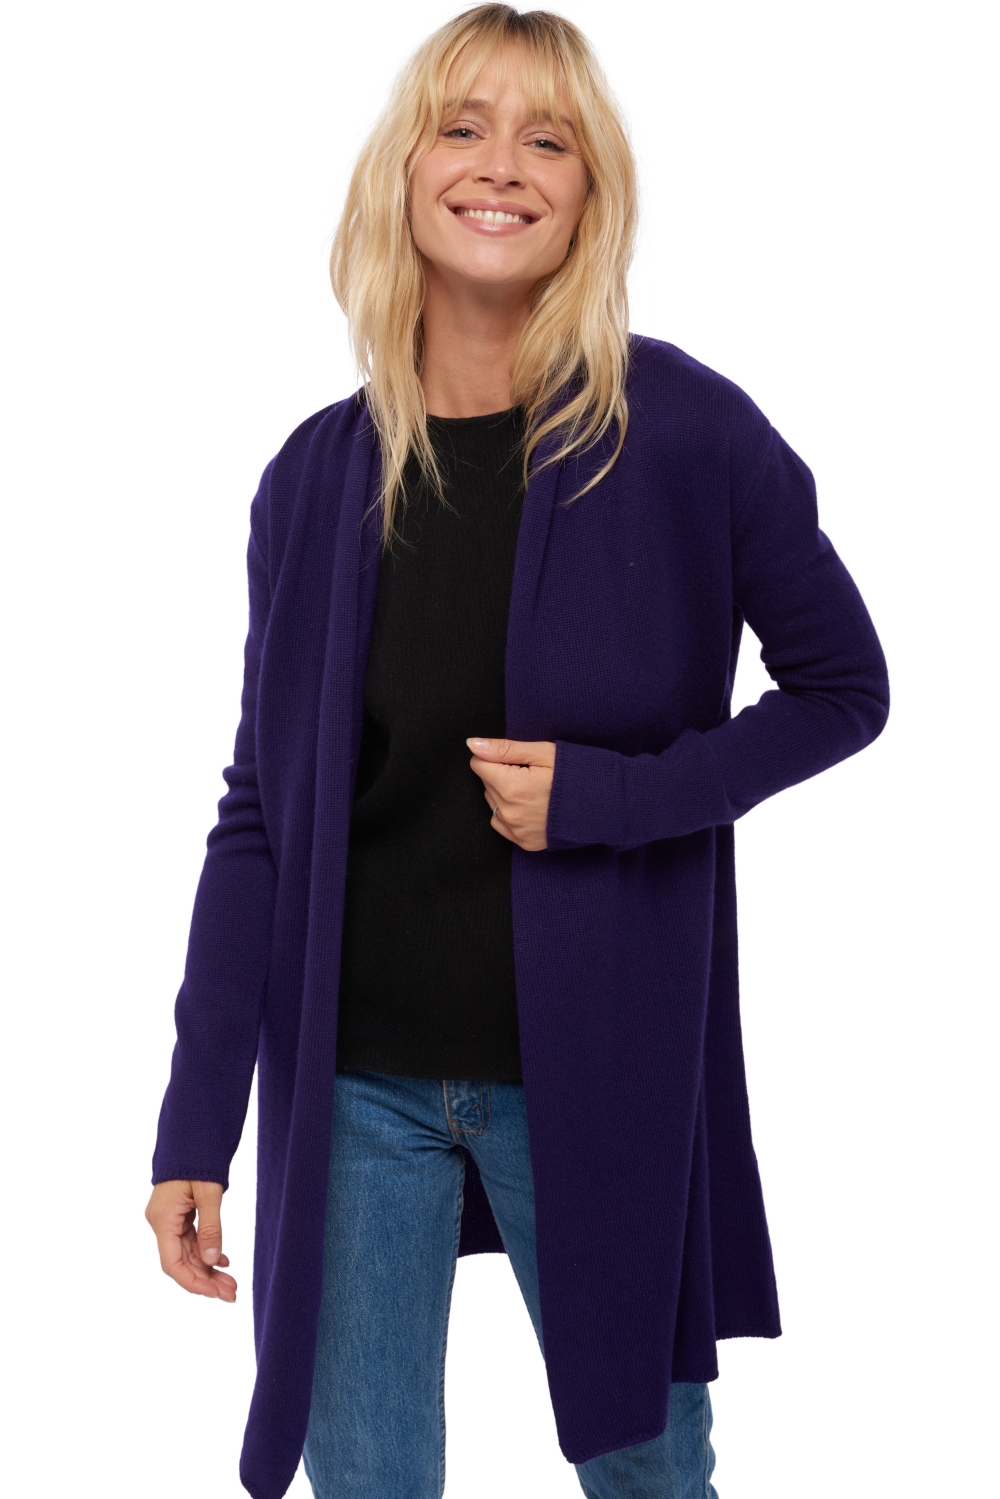 Cachemire robe manteau femme perla deep purple 2xl